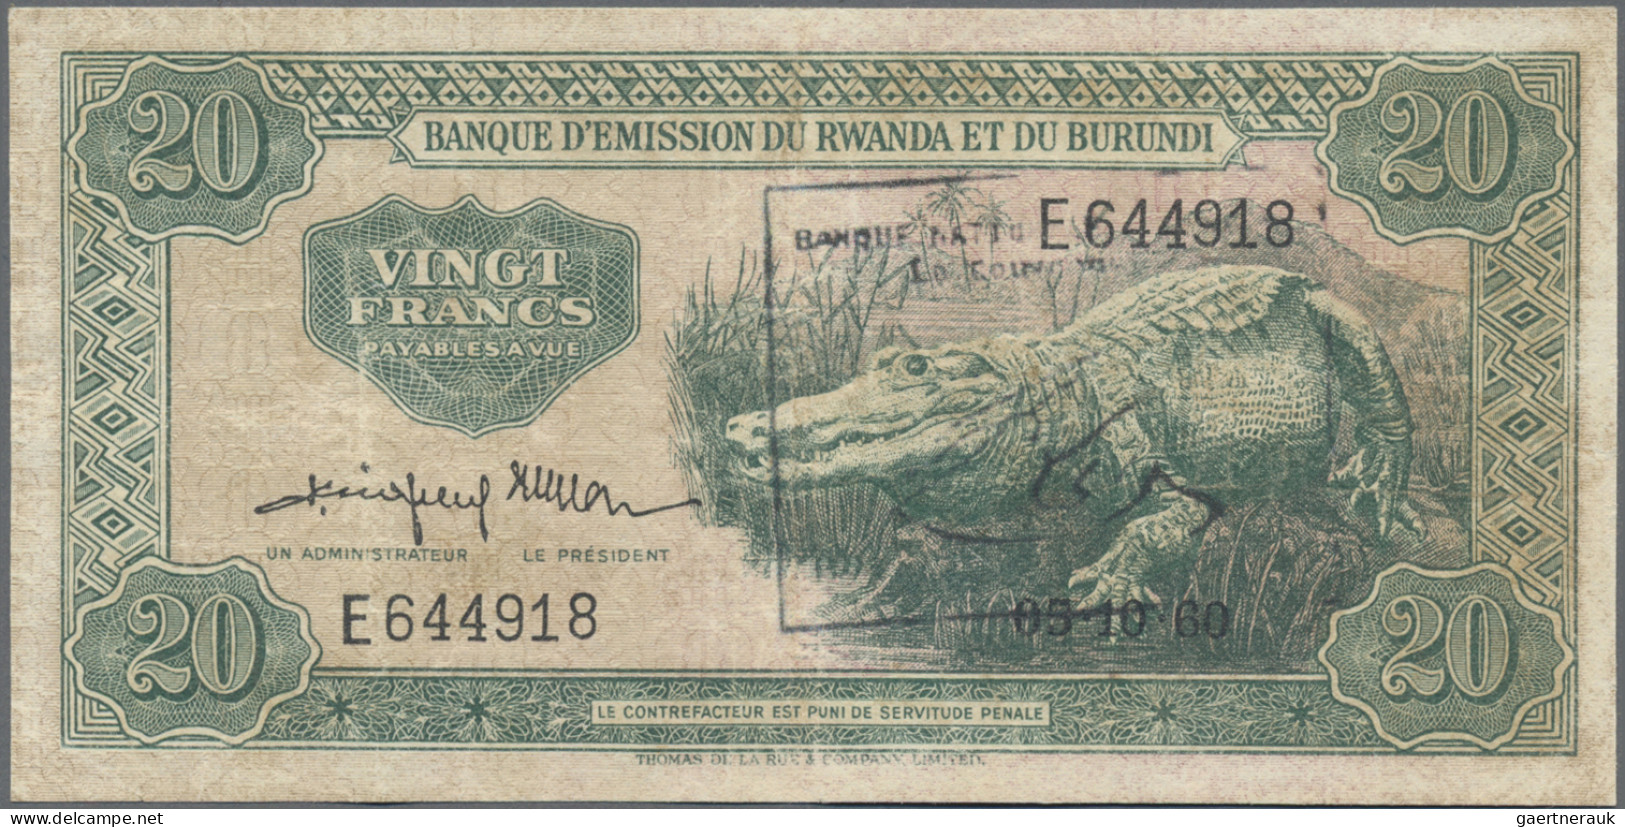 Rwanda: Banque Nationale Du Rwanda, 20 Francs 1960 (1962) With Handstamp "Banque - Ruanda